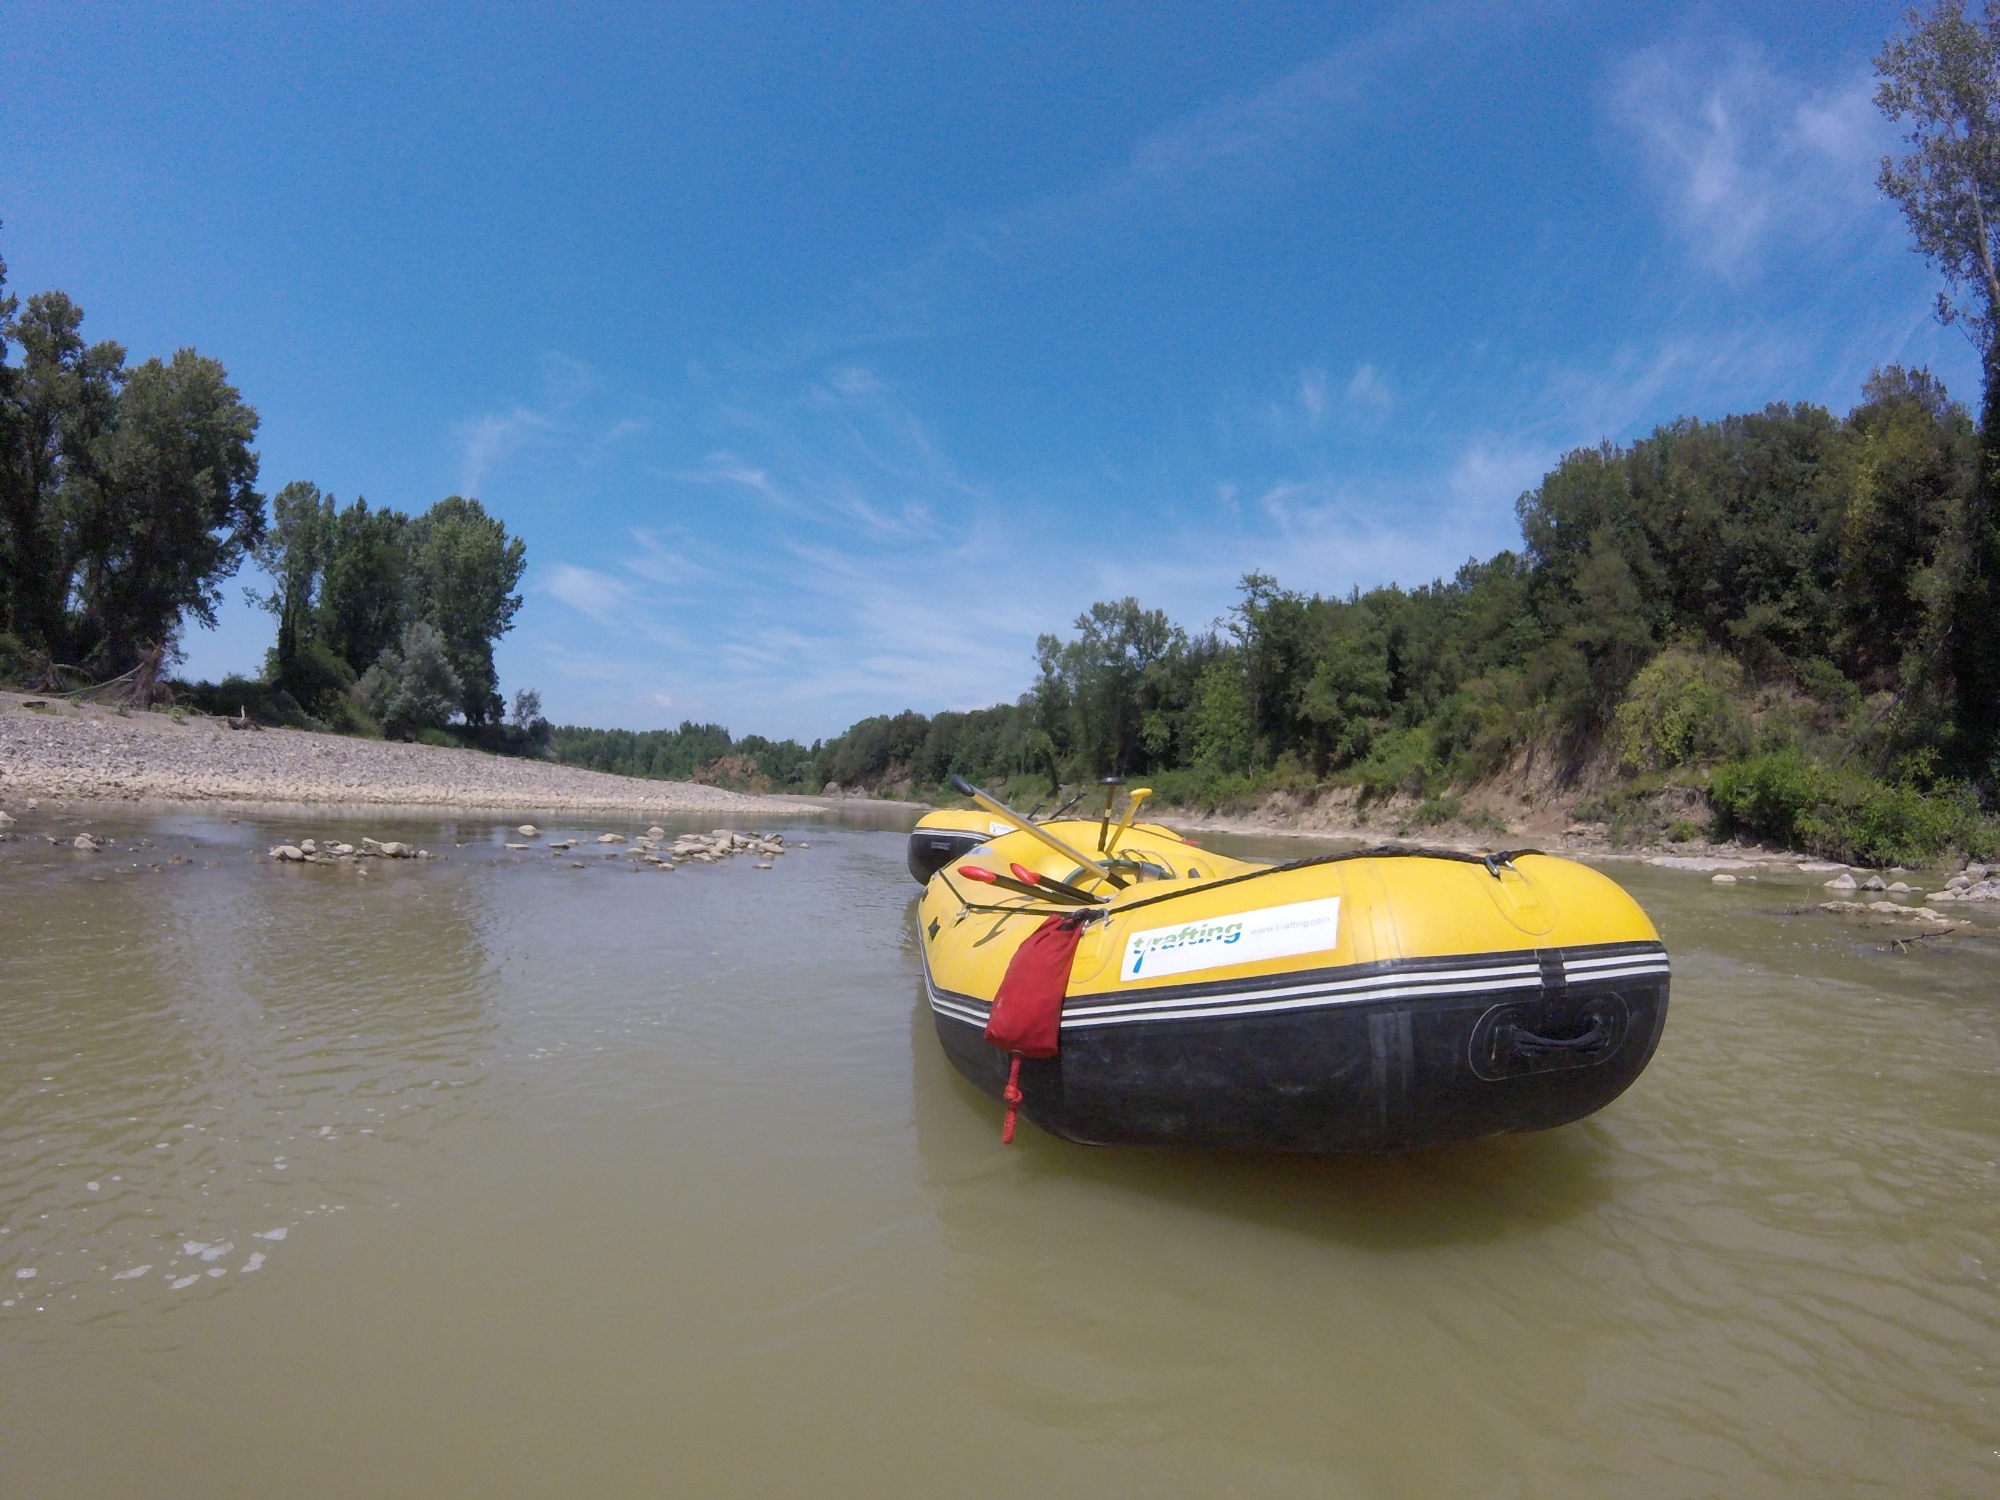 Rafting sur le fleuve Ombrone